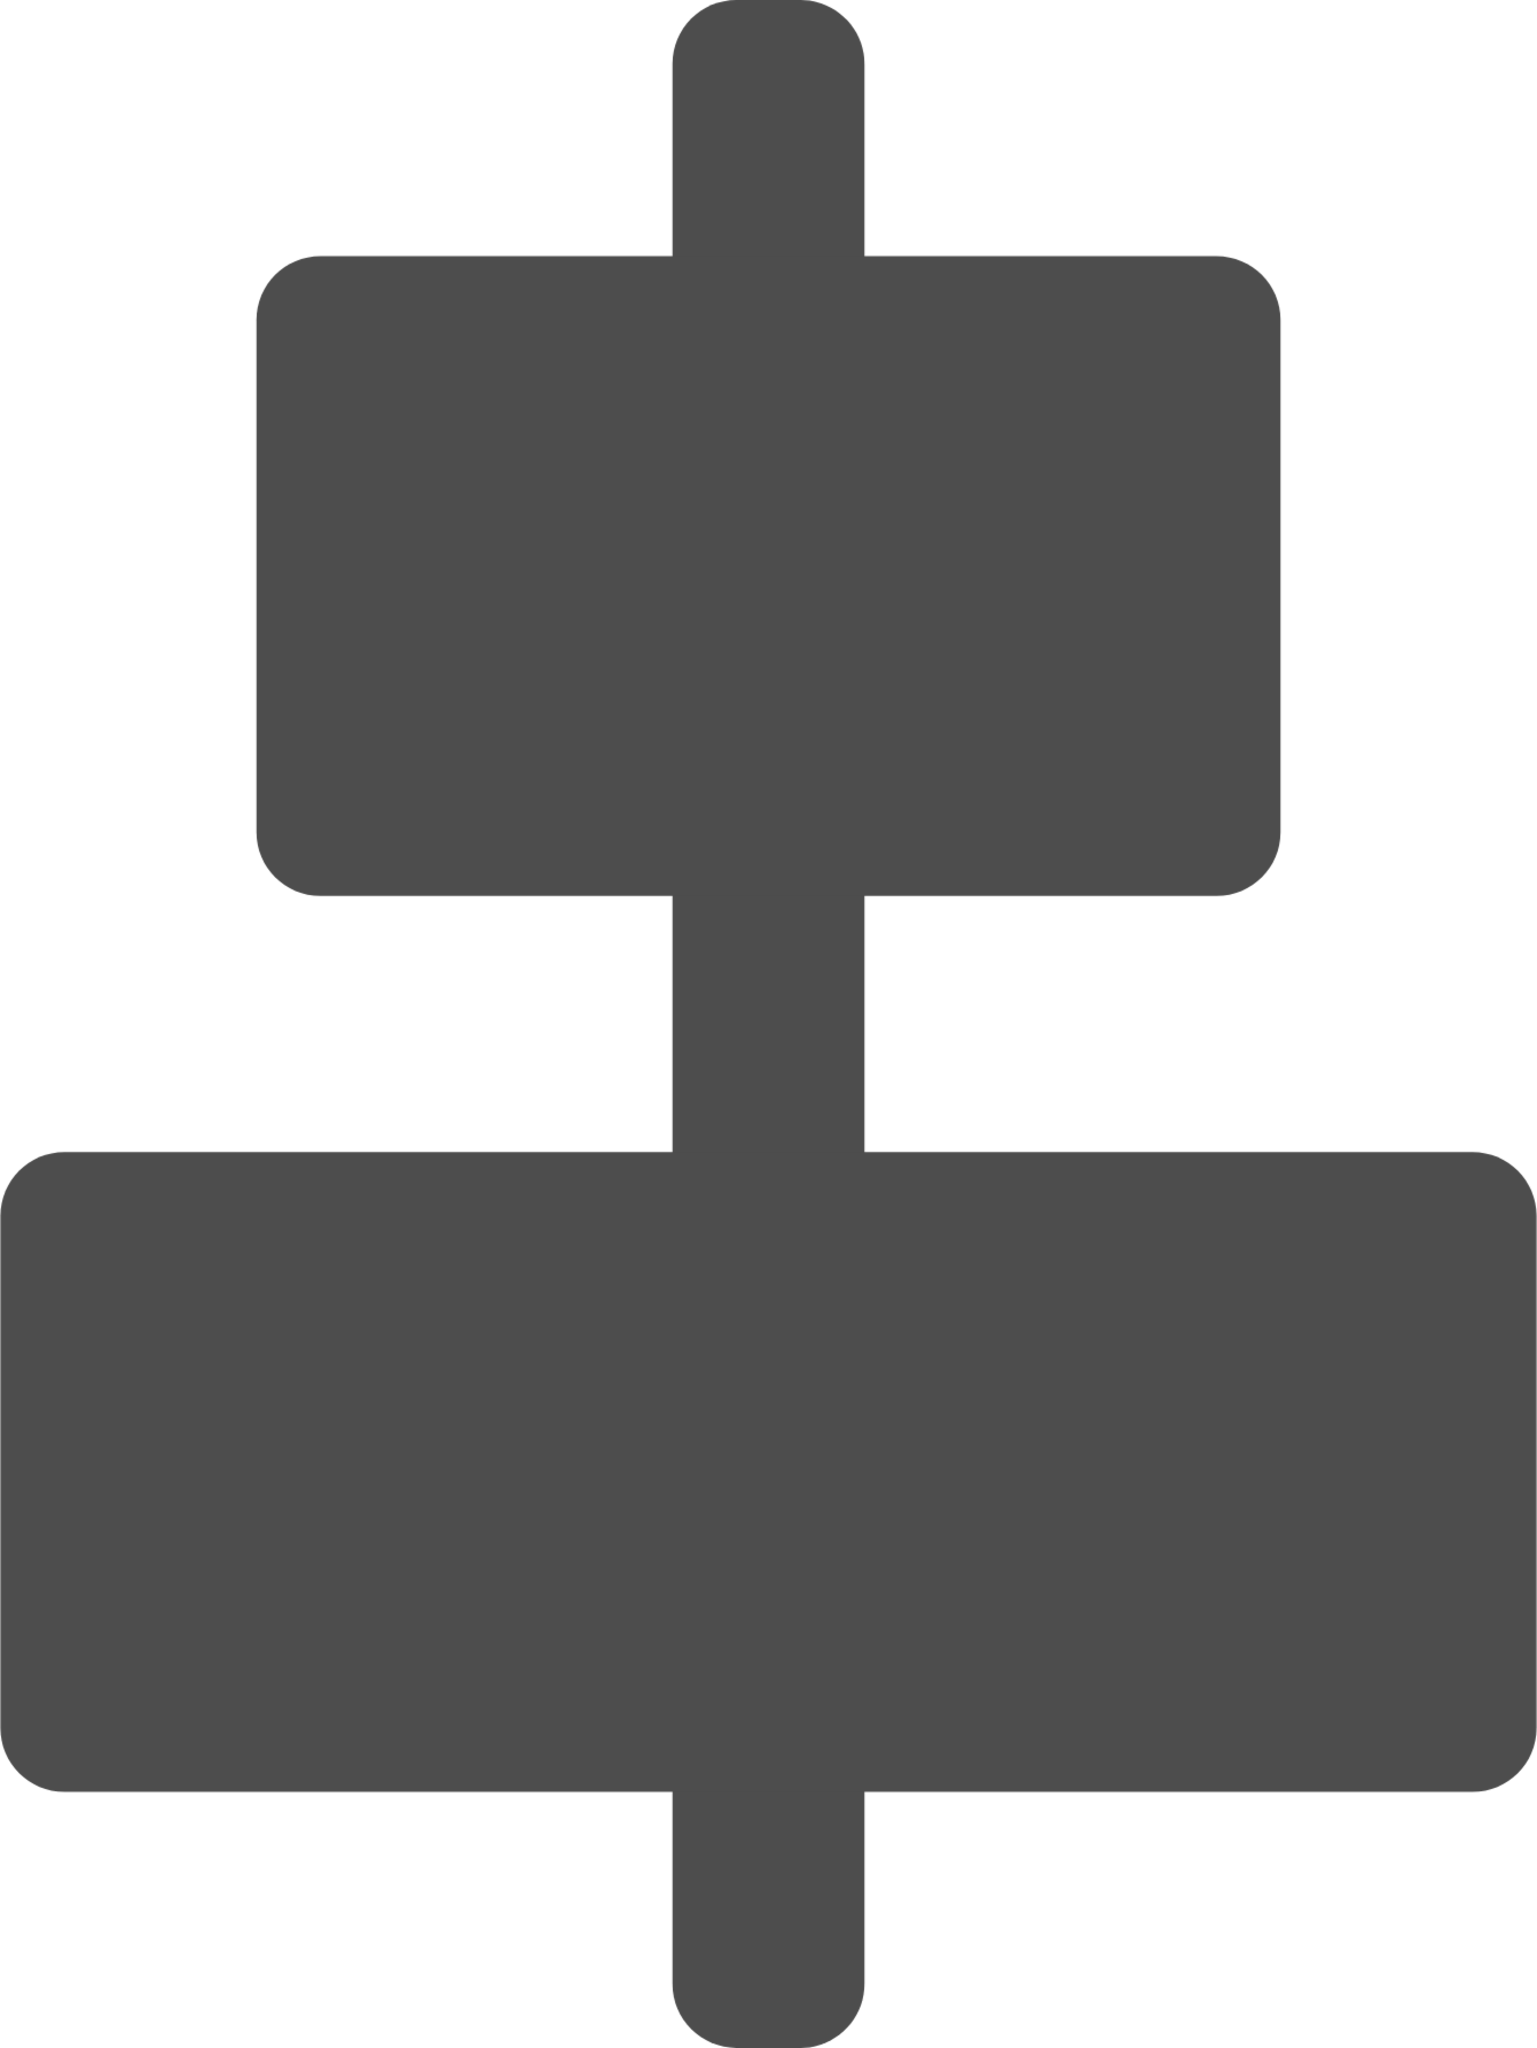 align horizontal center icon